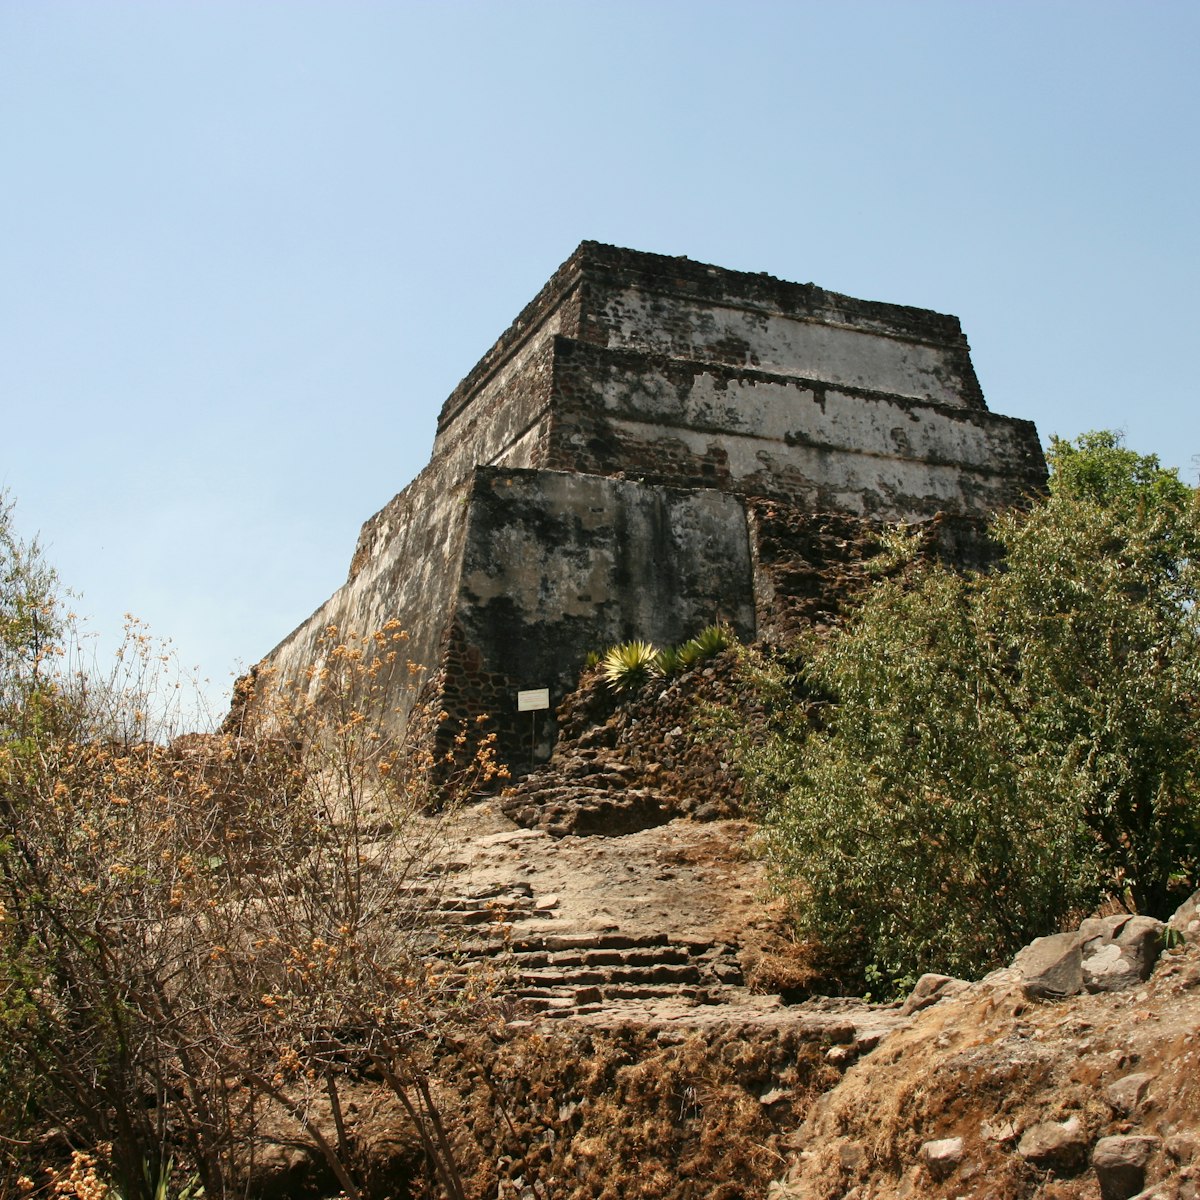 Pirámide de Tepozteco, built on the peak of the Sierra de Tepoztlan, Mexico.